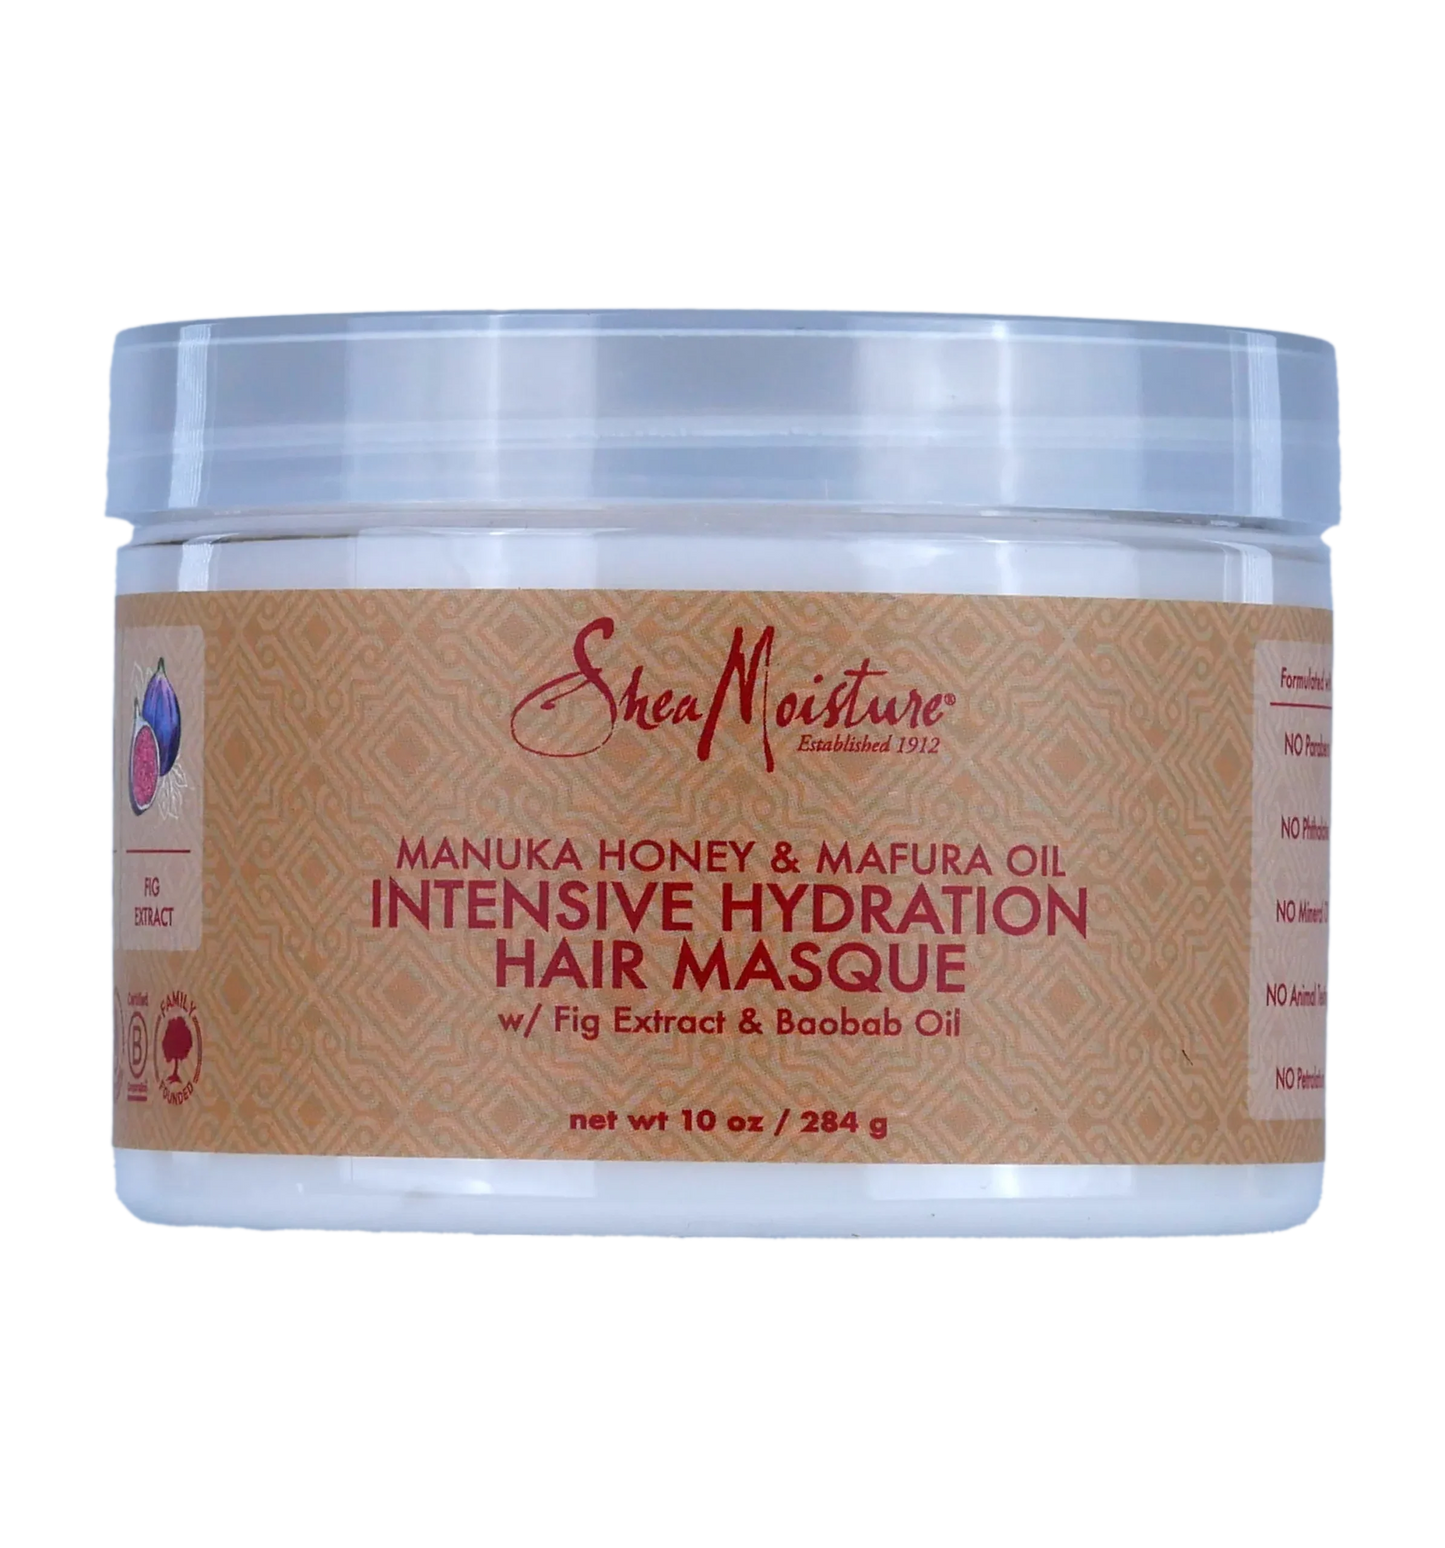 Shea Moisture Manuka Honey & Mafura Oil Intensive Hydration Hair Masque